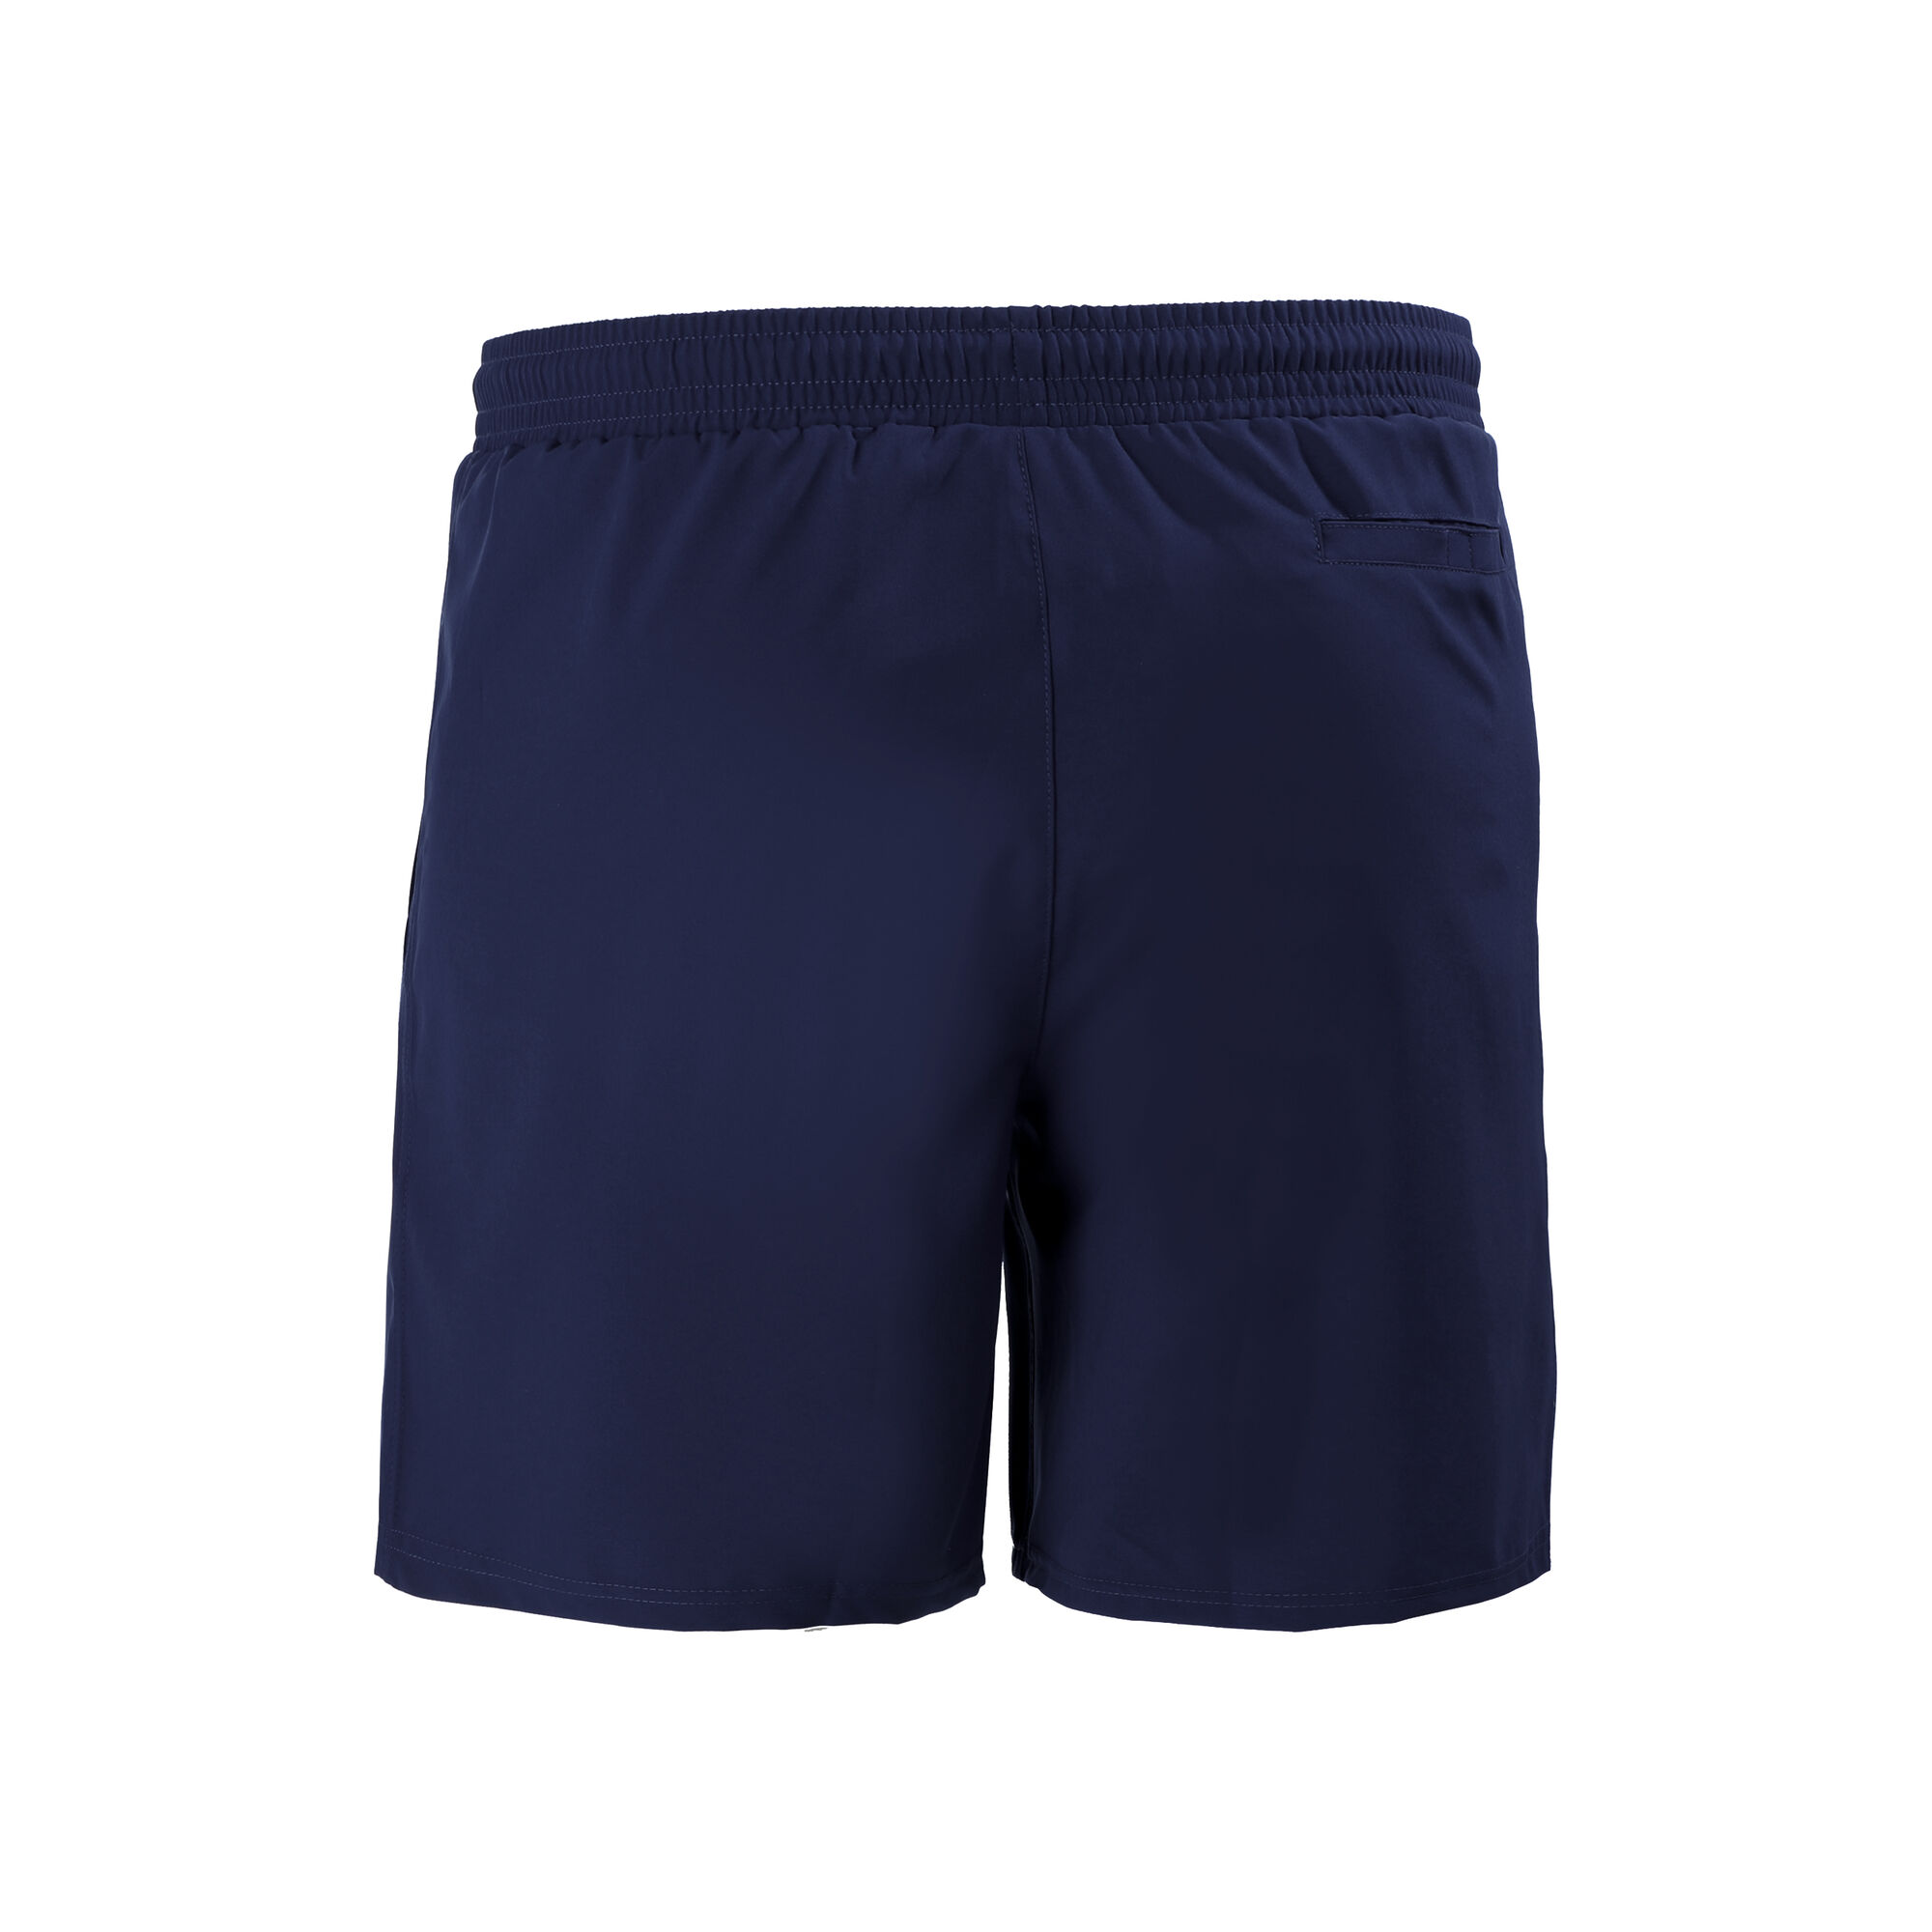 buy Australian Shorts Men - Dark Blue online | Tennis-Point